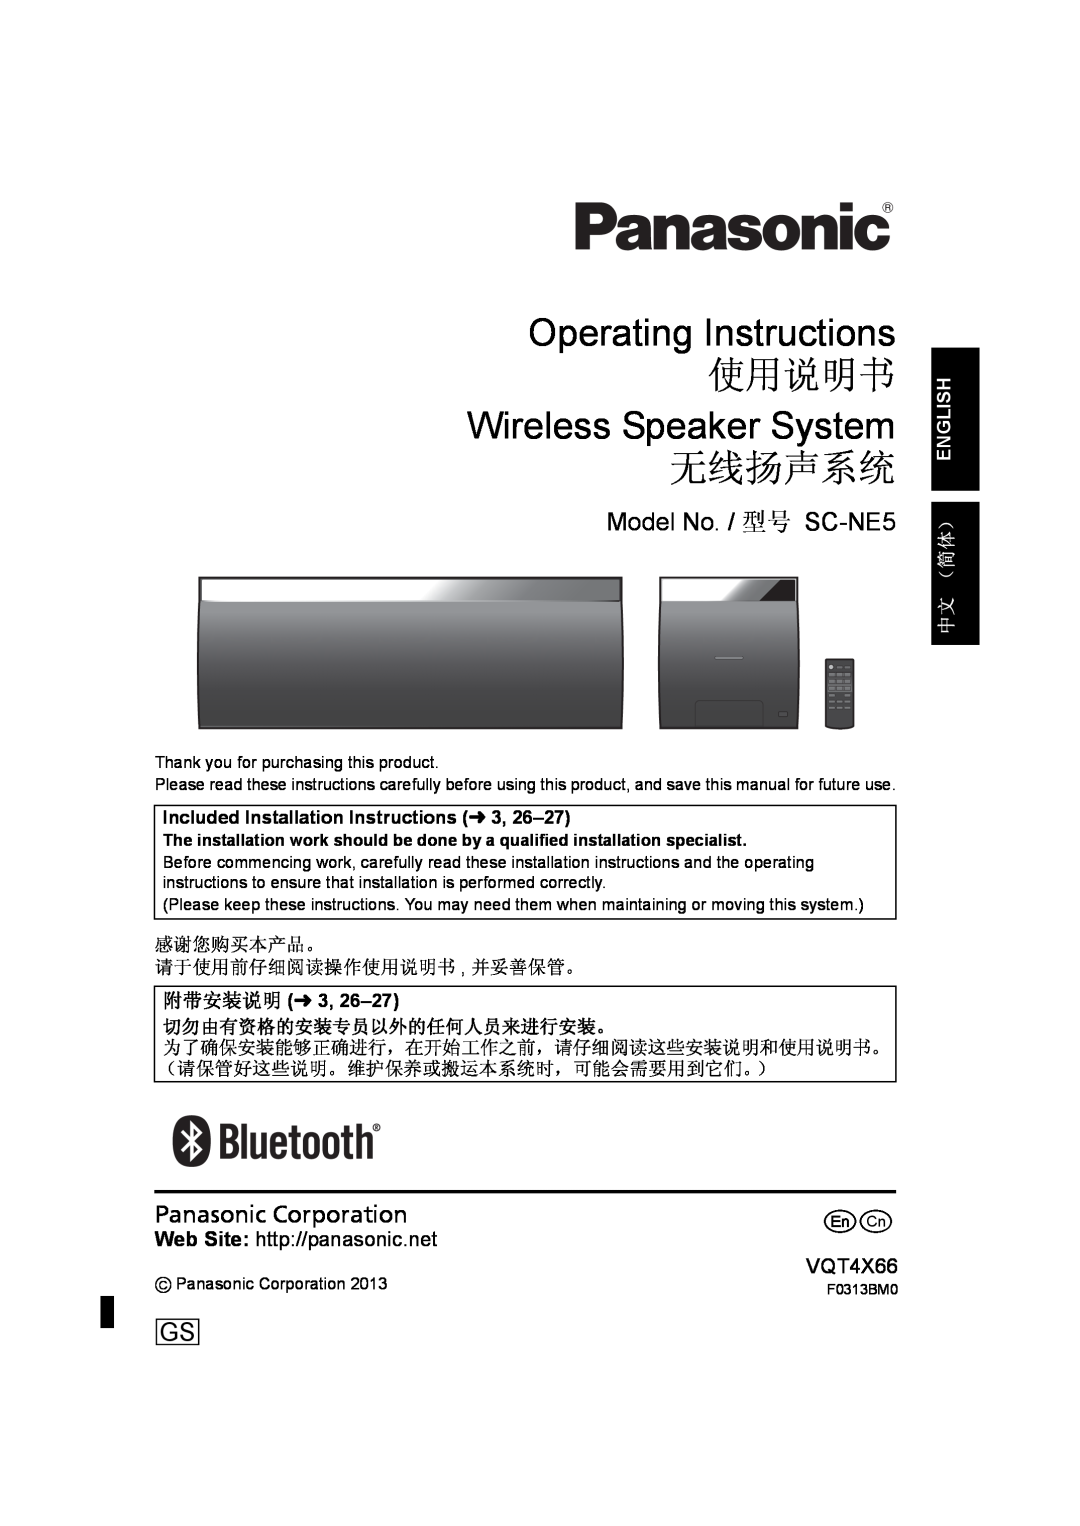 Panasonic installation instructions Operating Instructions, Wireless Speaker System, Model No. / 型号 SC-NE5, VQT4X66 